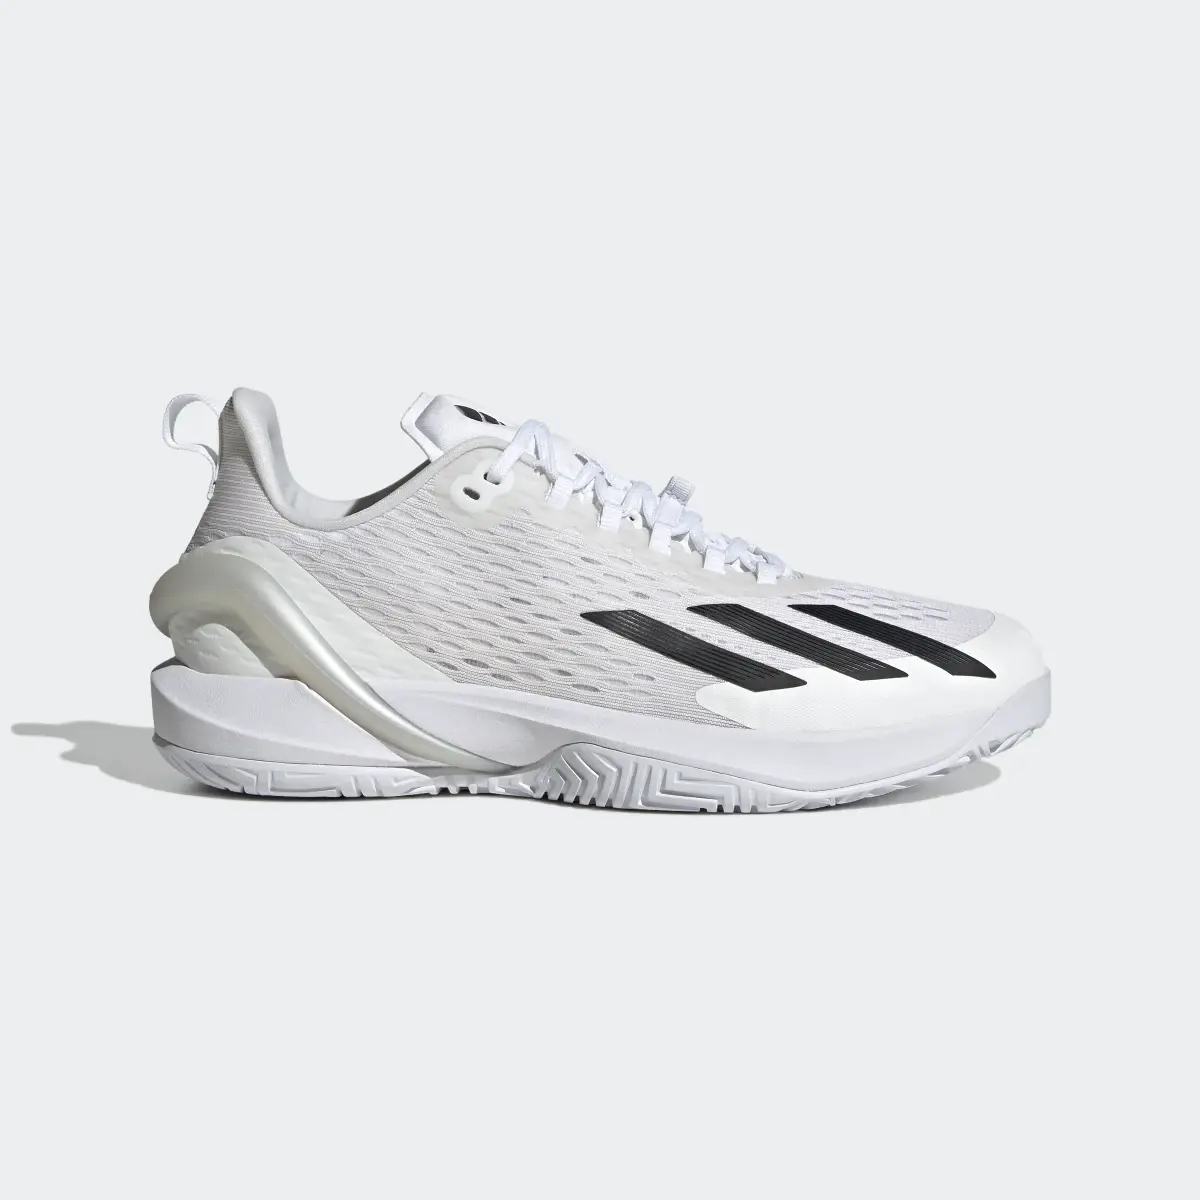 Adidas adizero Cybersonic Tenis Ayakkabısı. 2